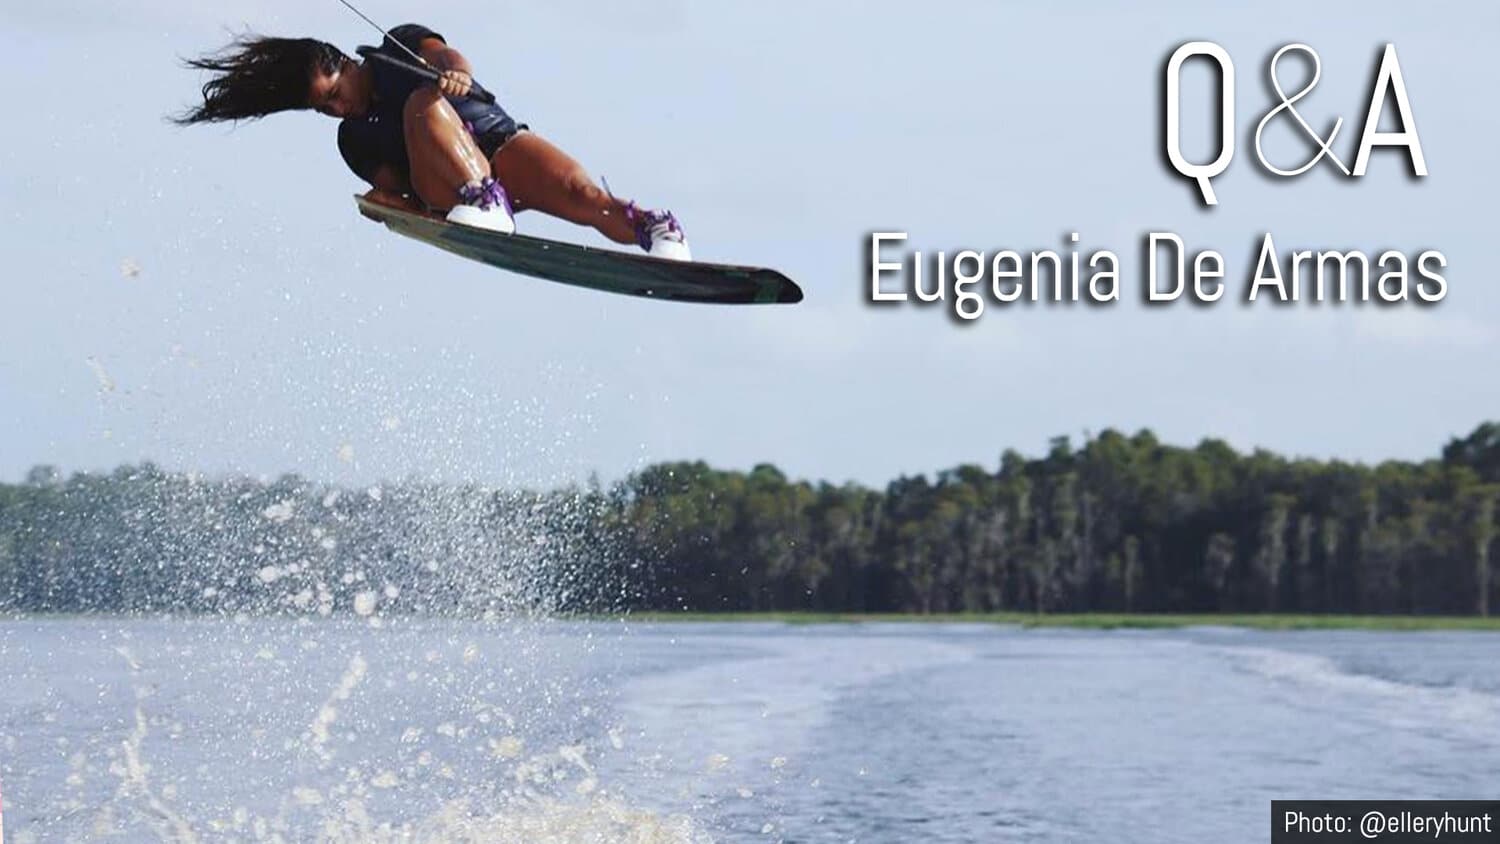 https://www.wakeboardingmag.com/uploads/2021/11/Eugenia_article-header.jpg